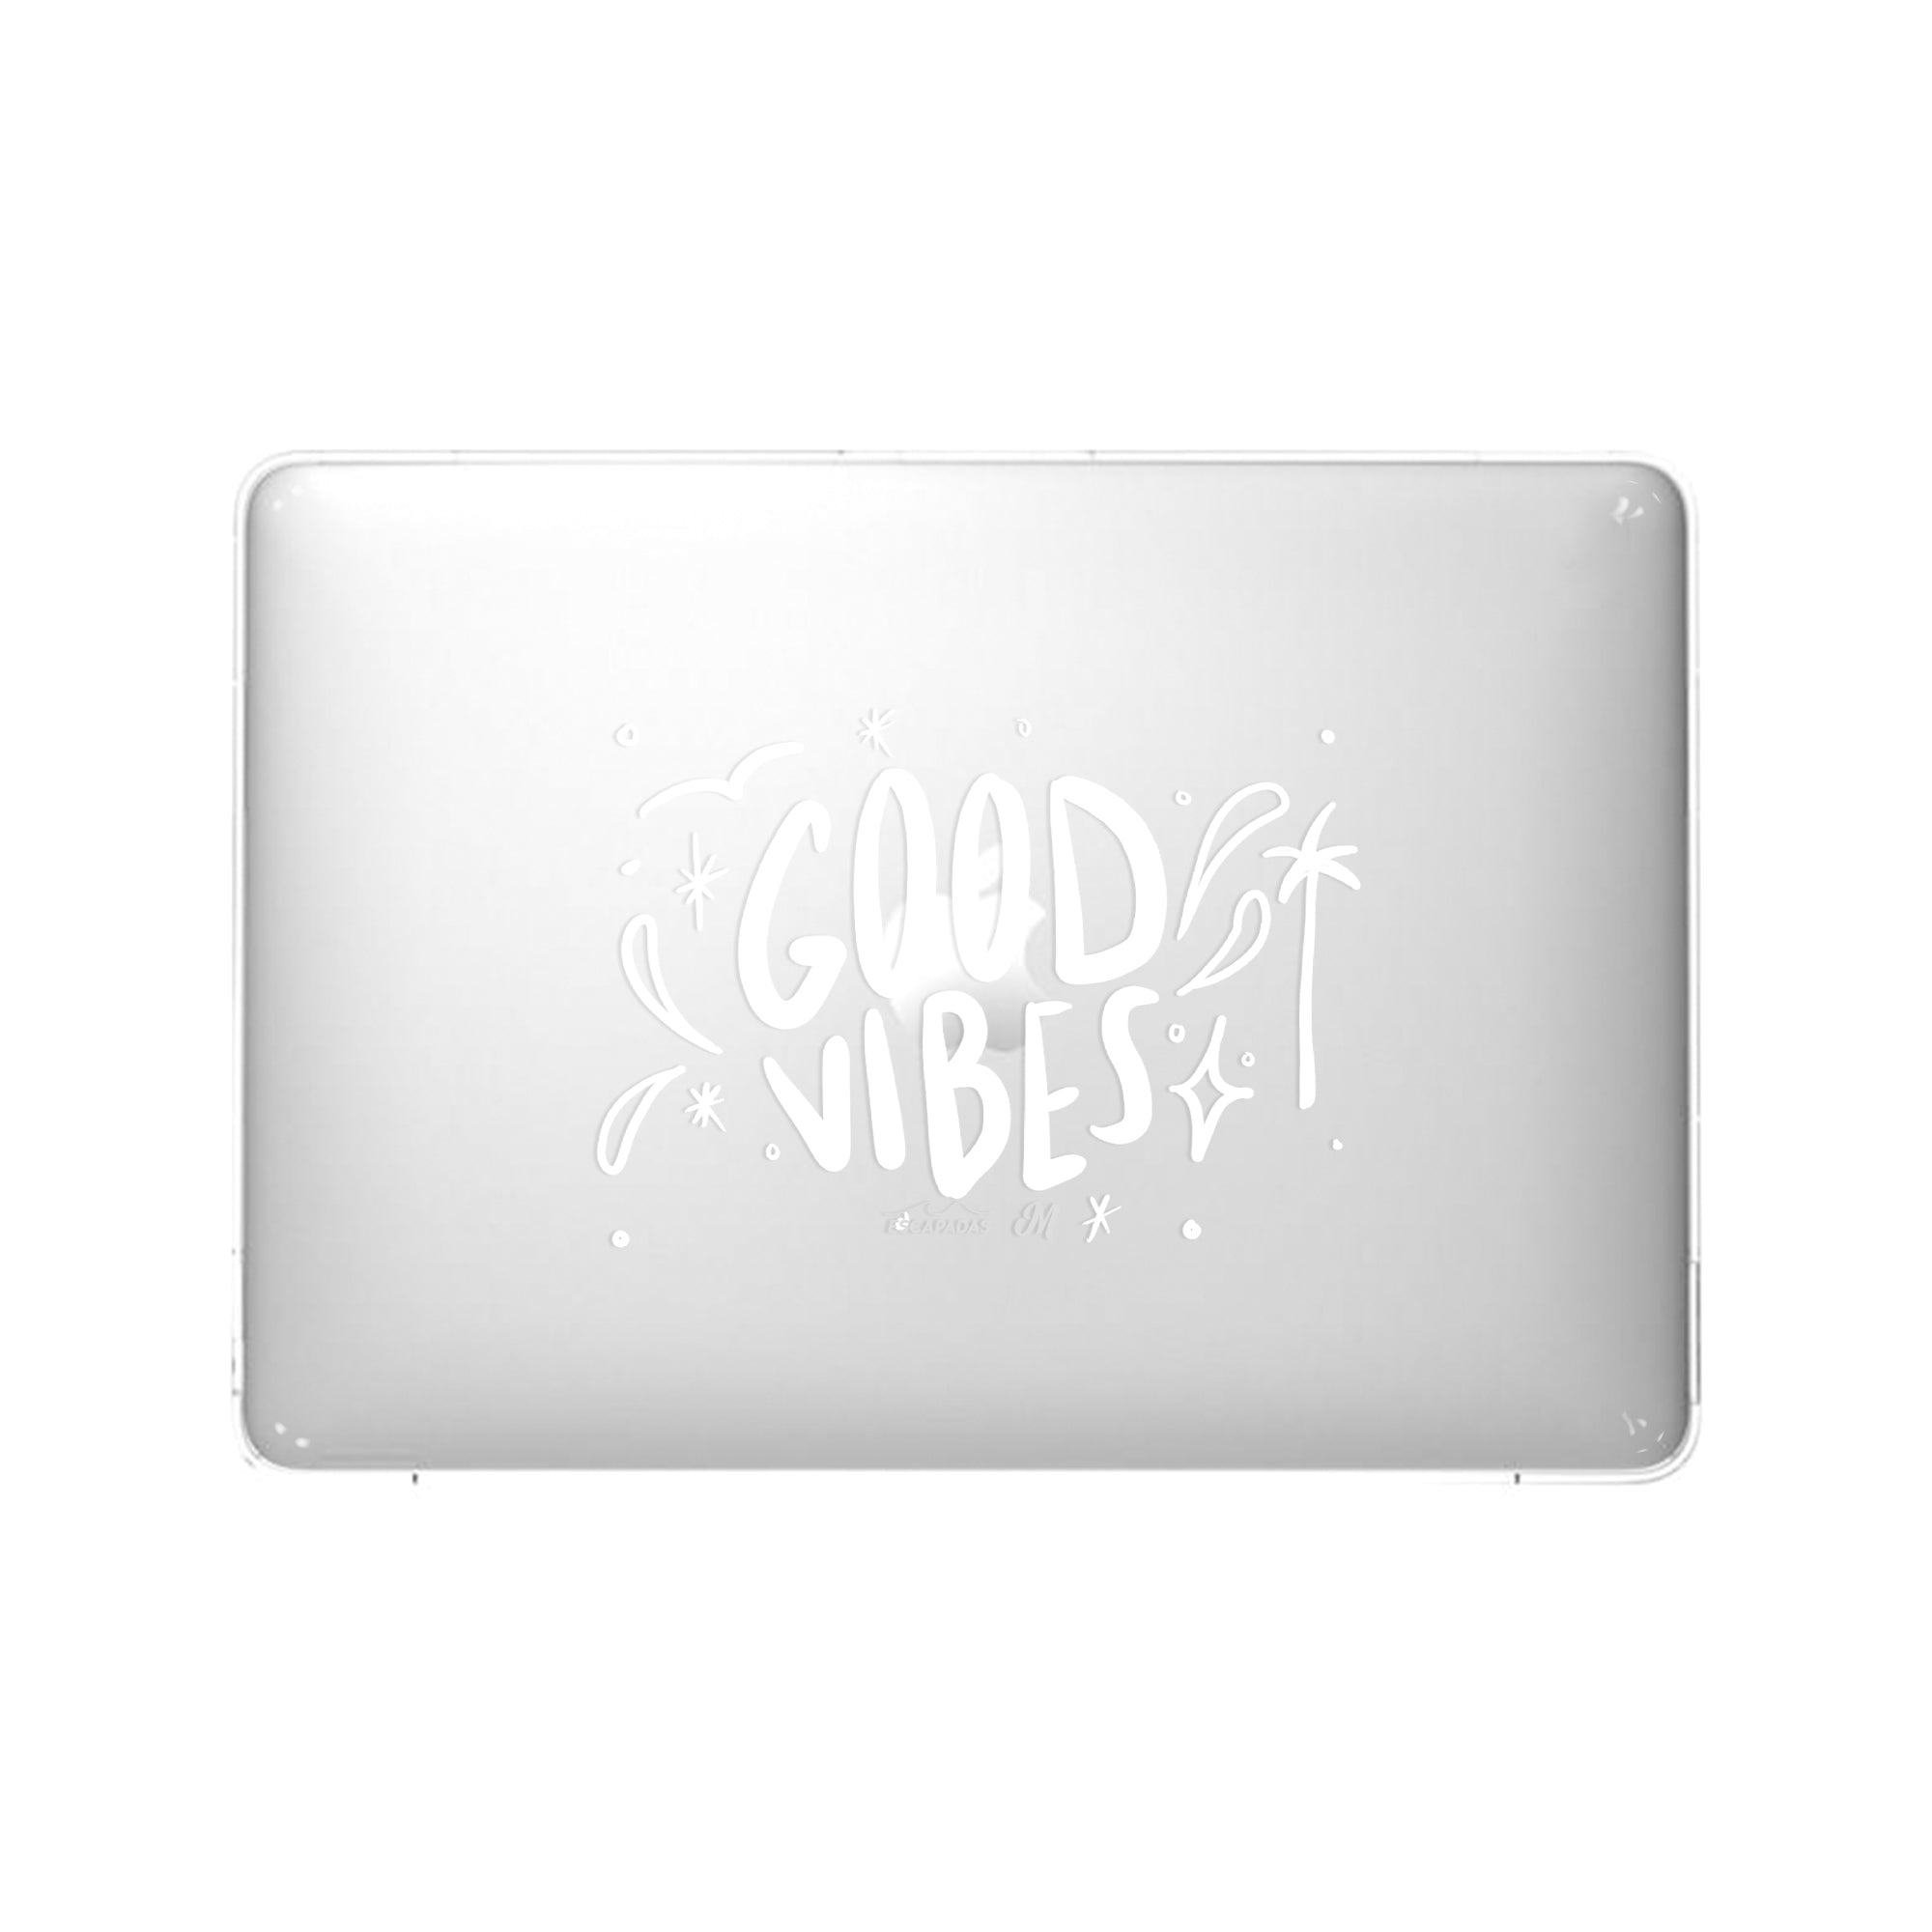 Good Vibes MacBook Case - Mandala Cases